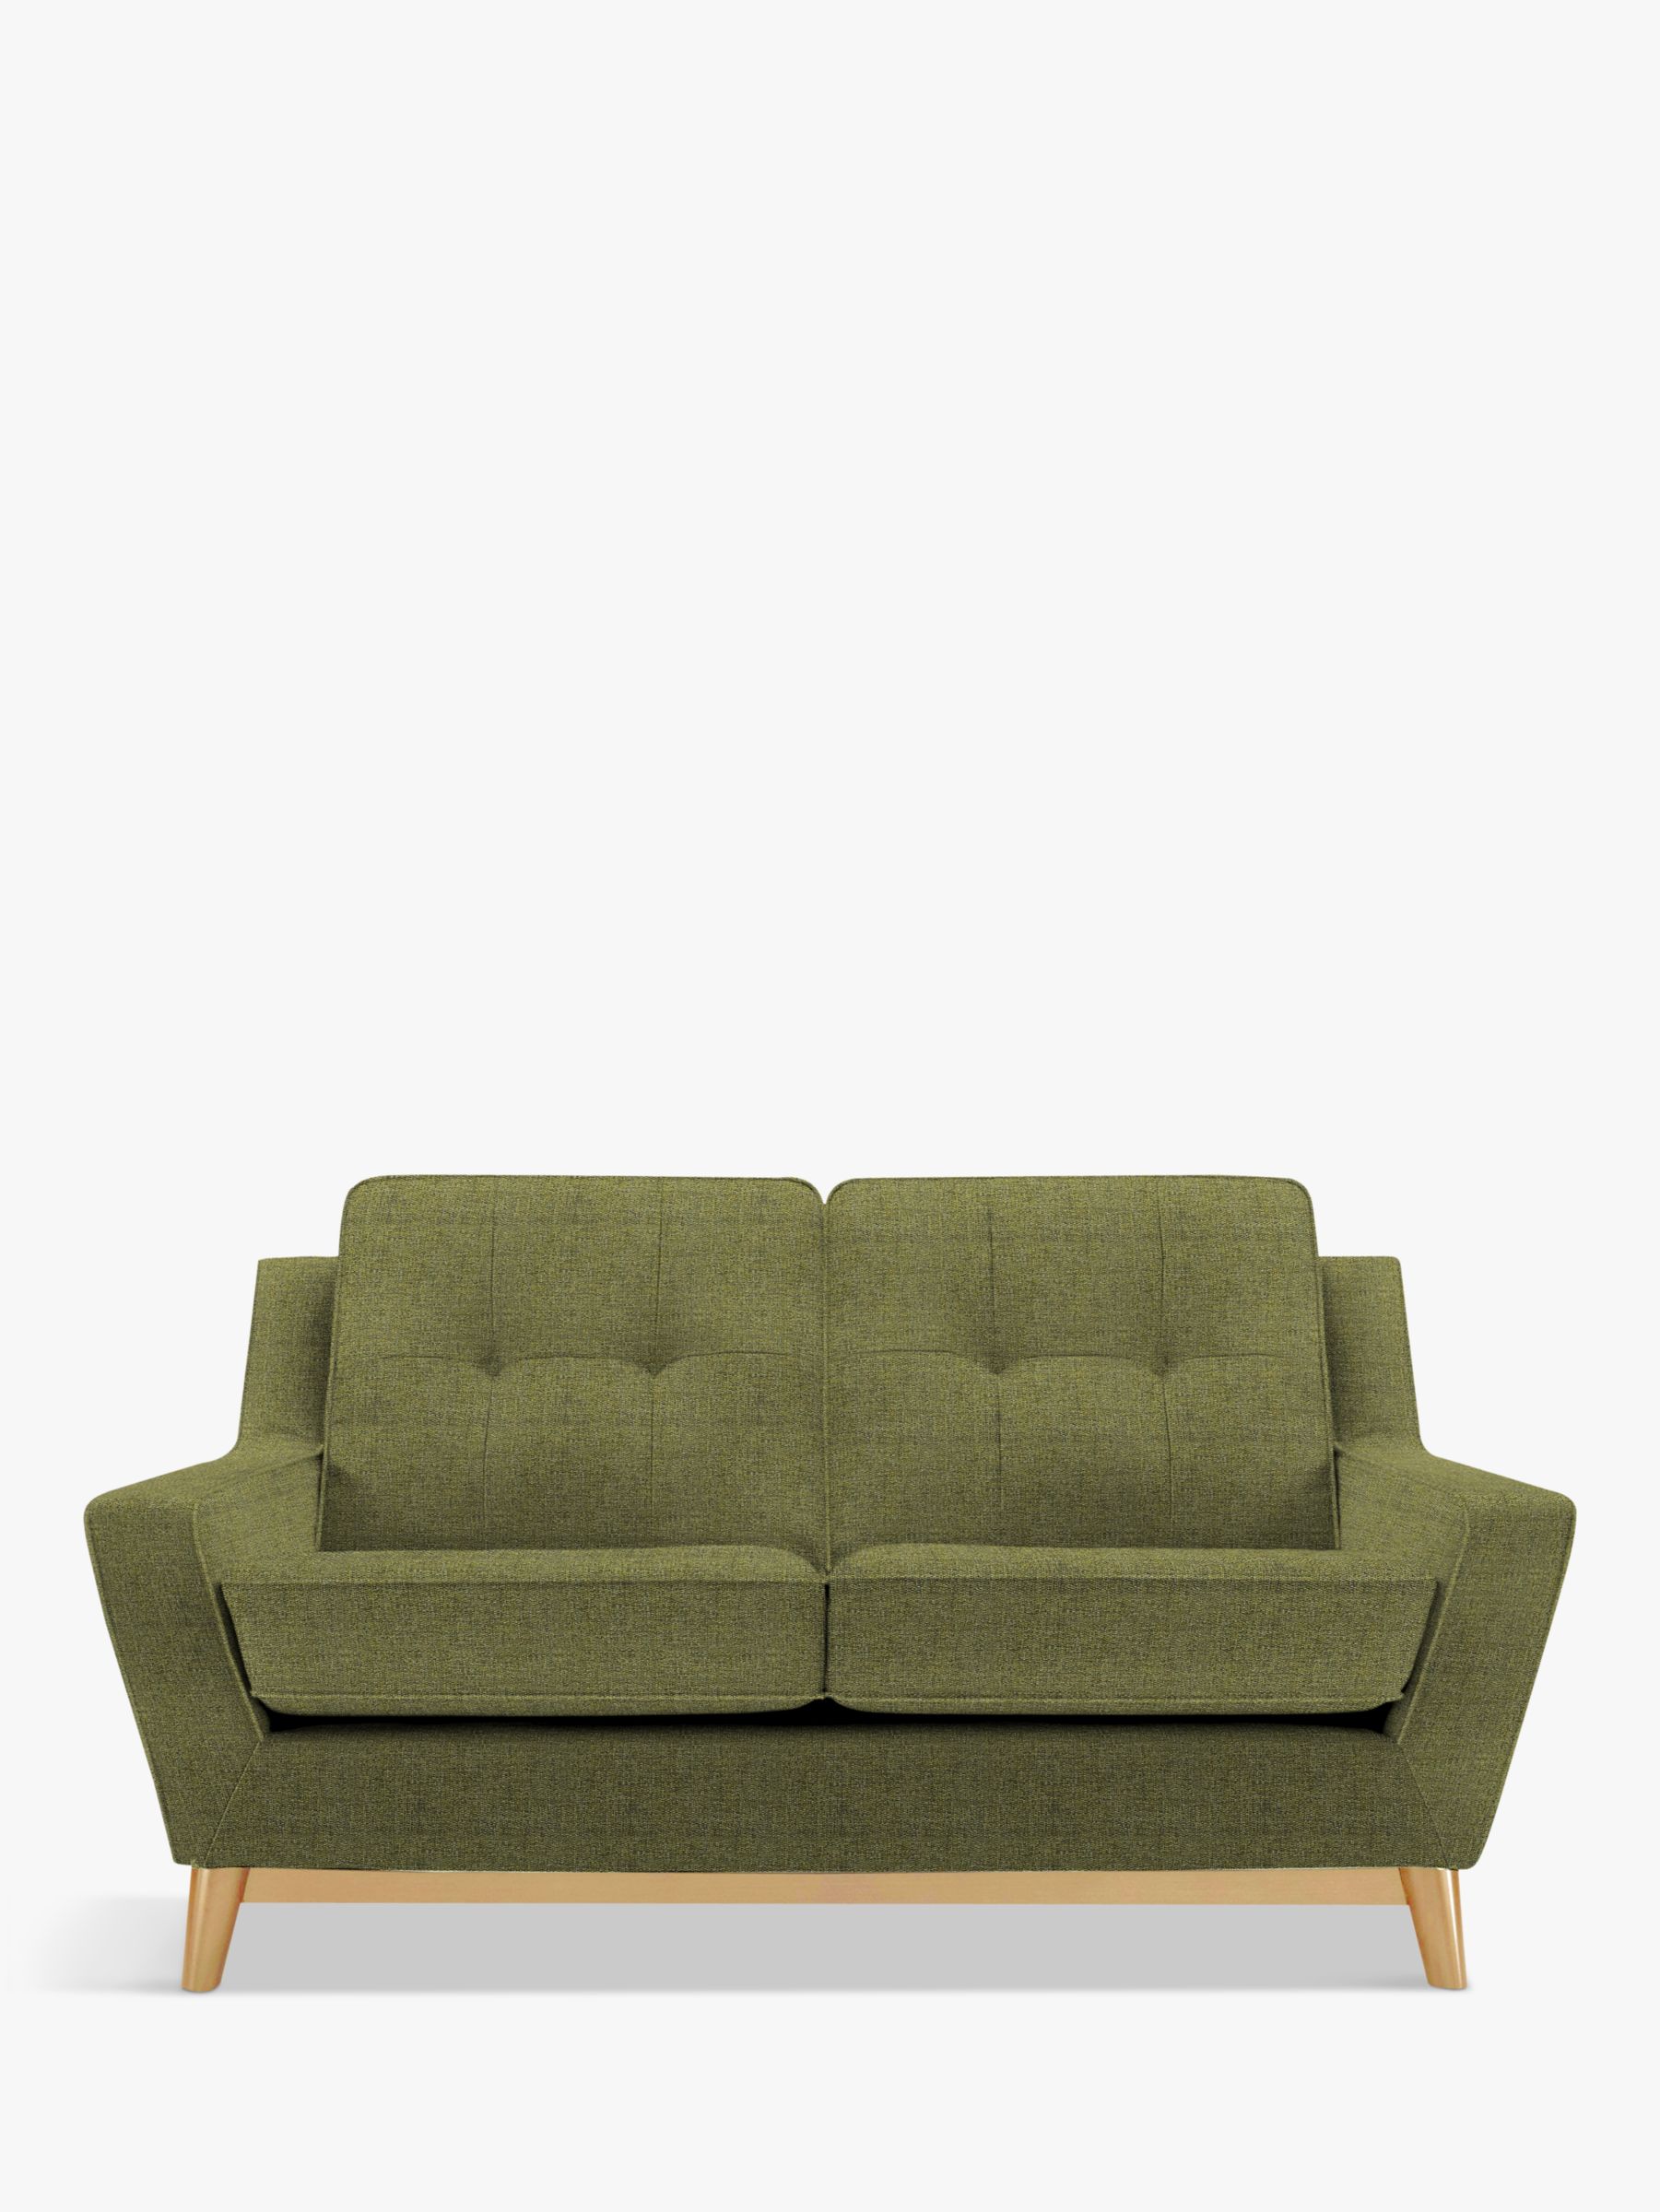 G Plan Vintage The Fifty Three Small Sofa, Marl Green, width 159cm